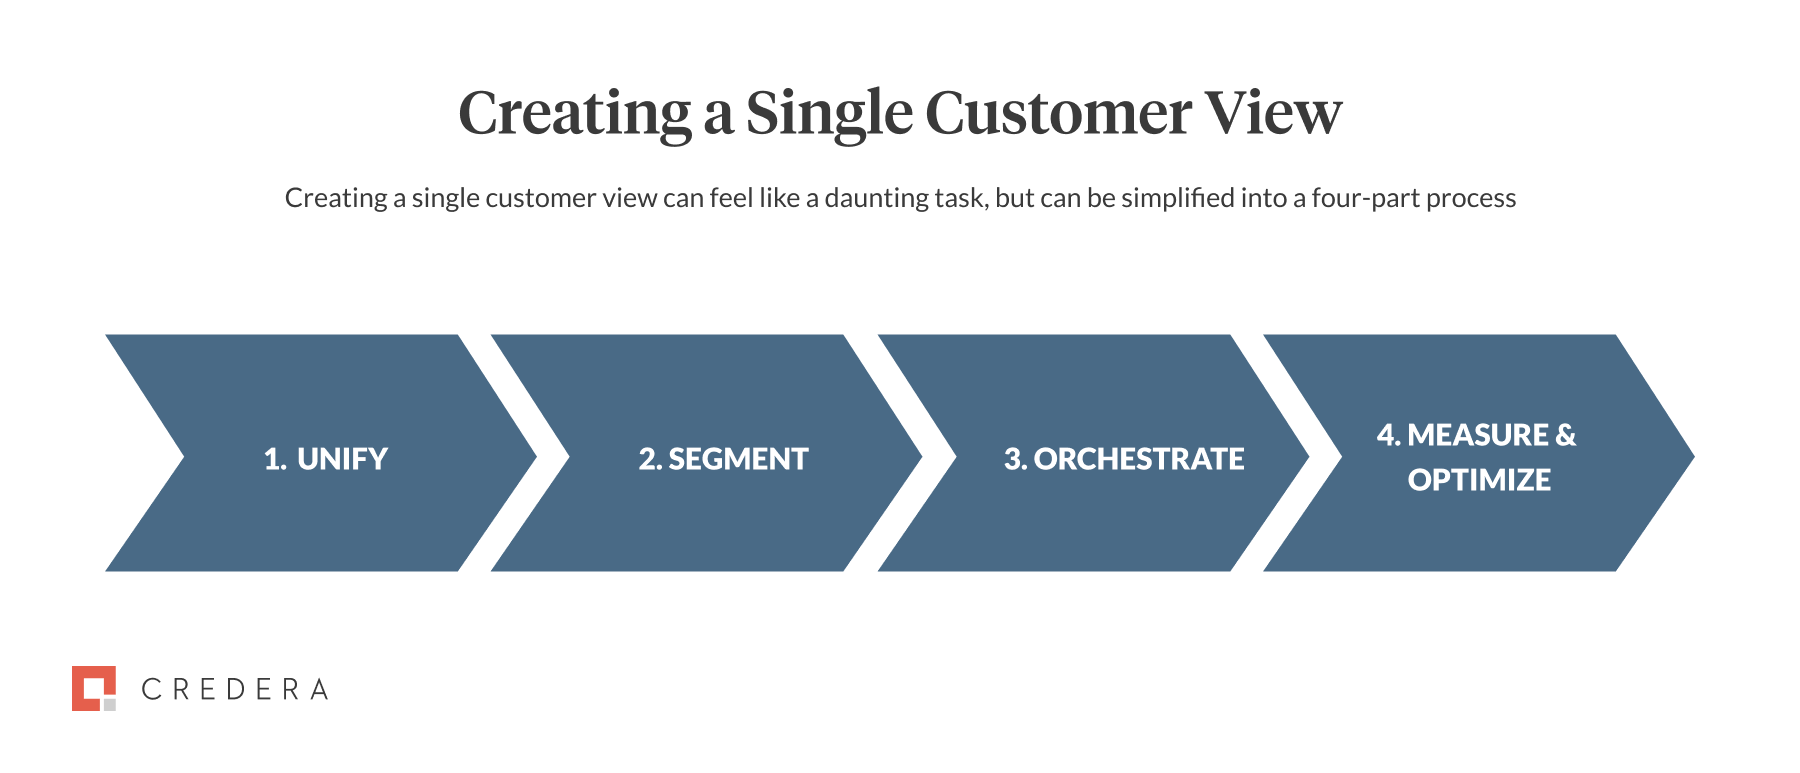 Creating a Single Customer View